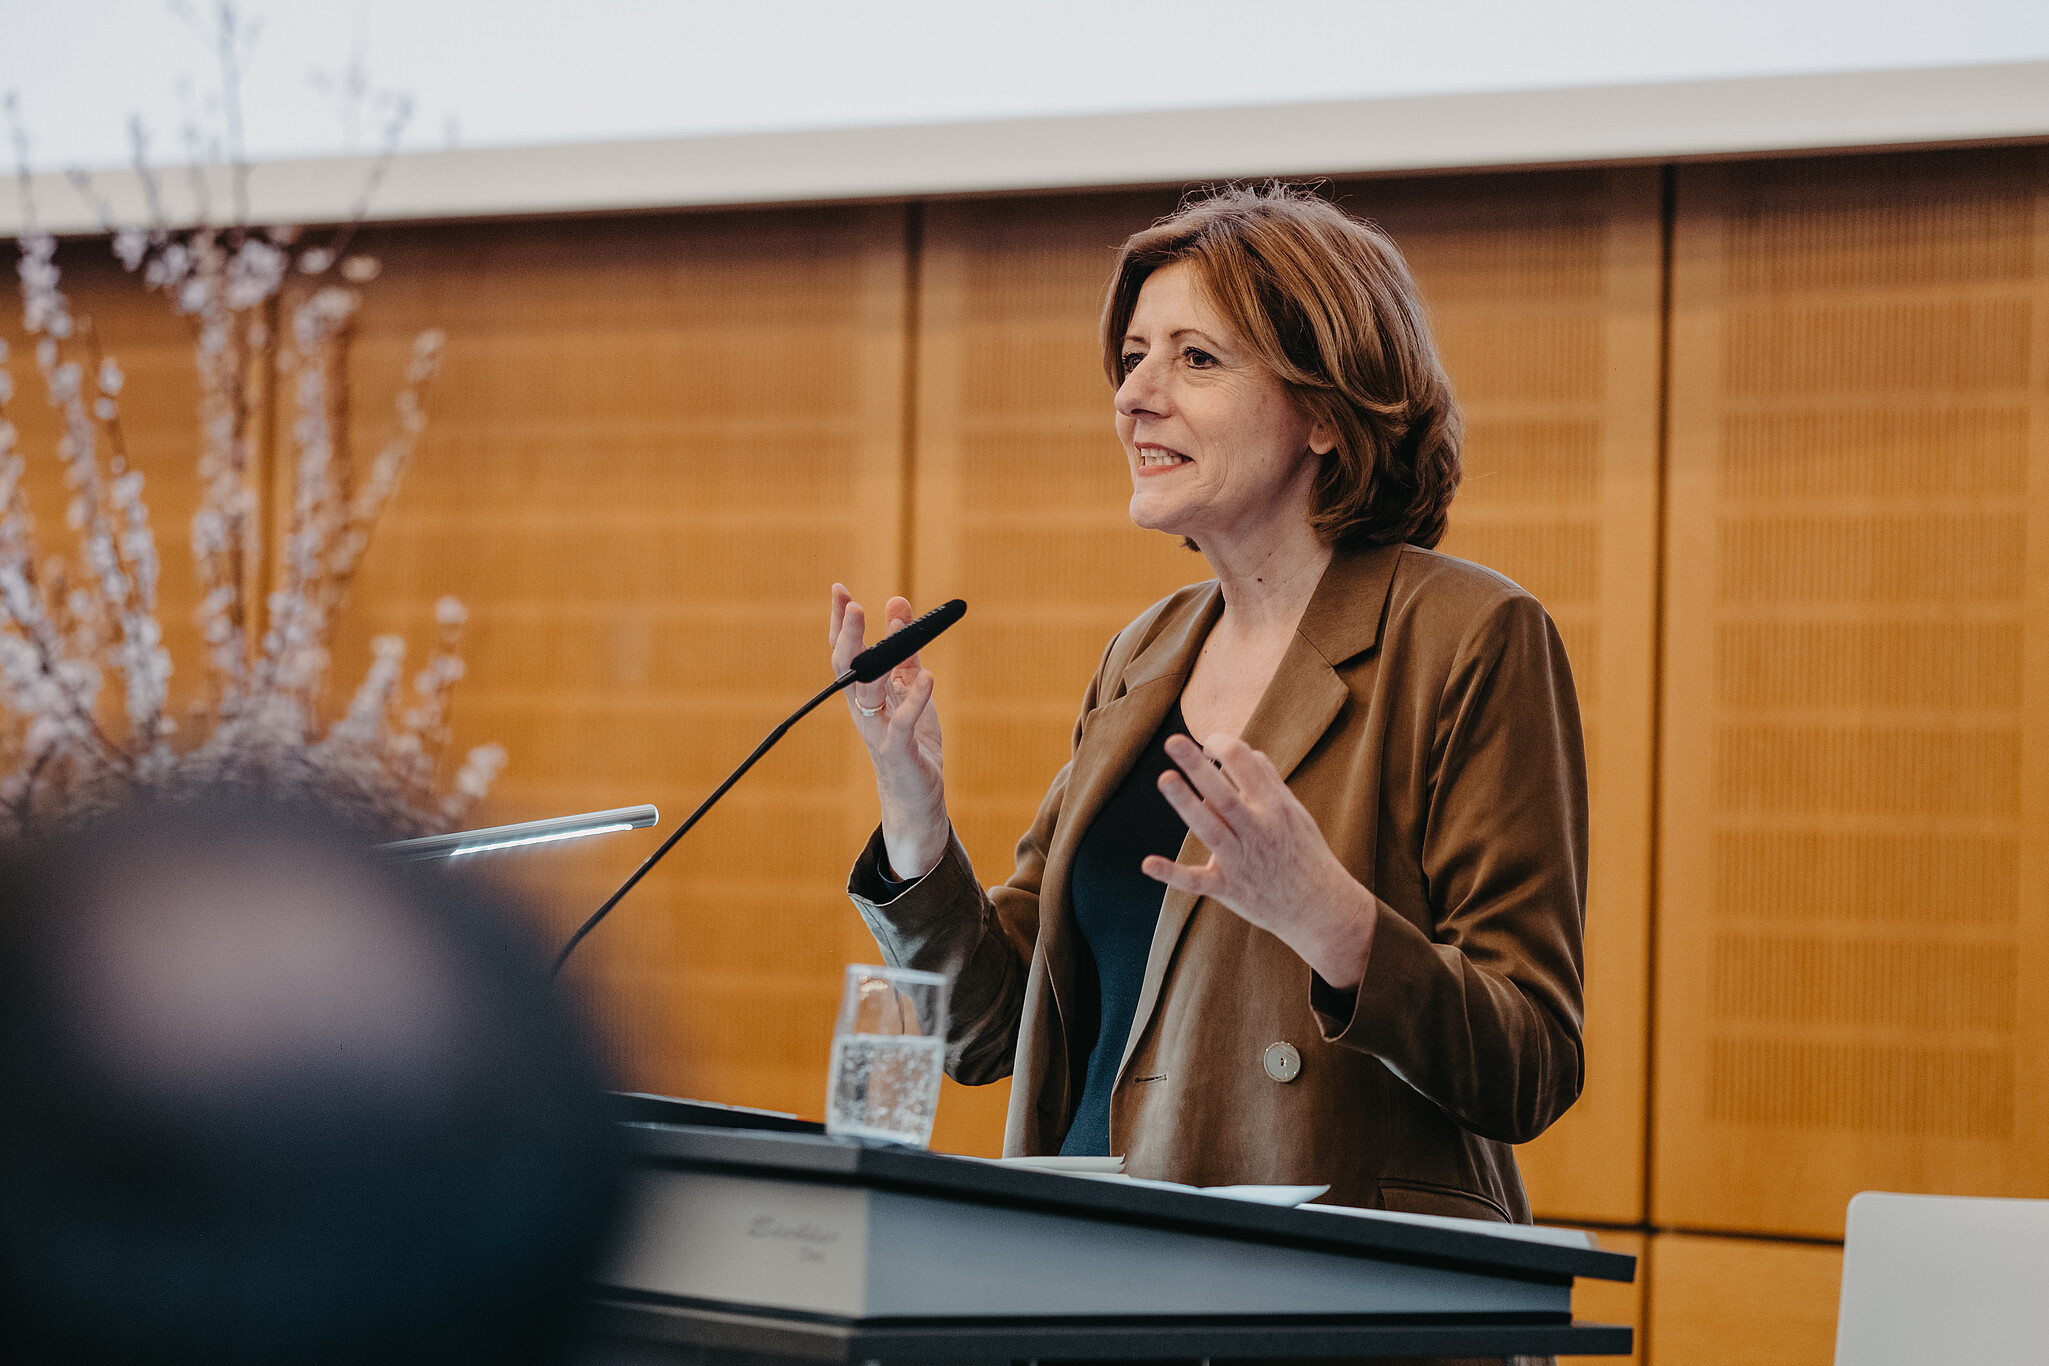 Malu Dreyer, Minister President of Rhineland-Palatinate, during her welcoming speech